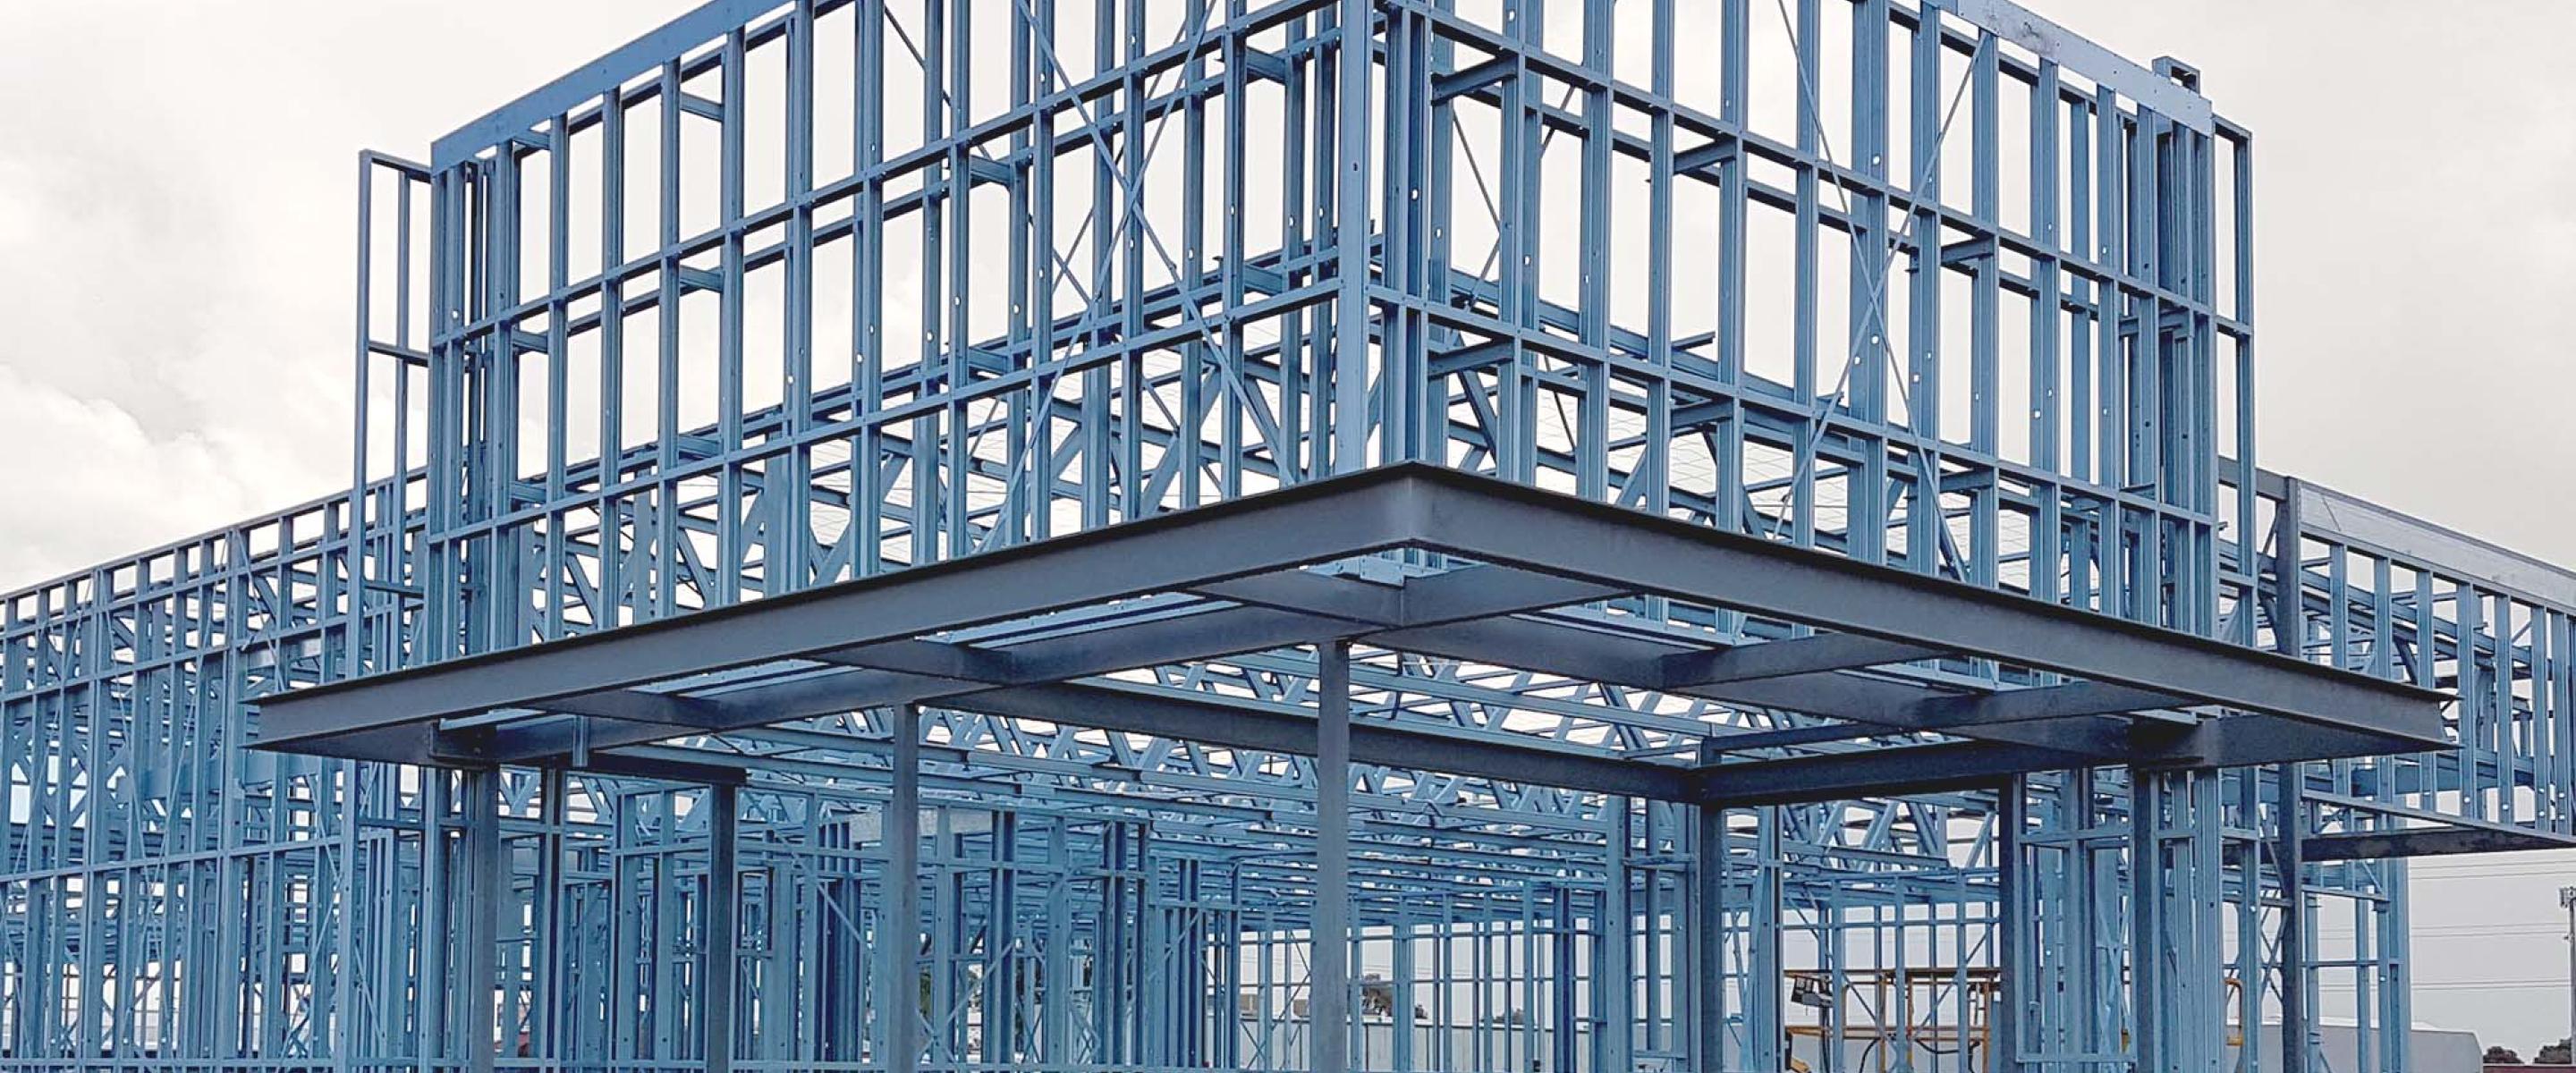 Smartsteel Frames uses framing made from TRUECORE® steel